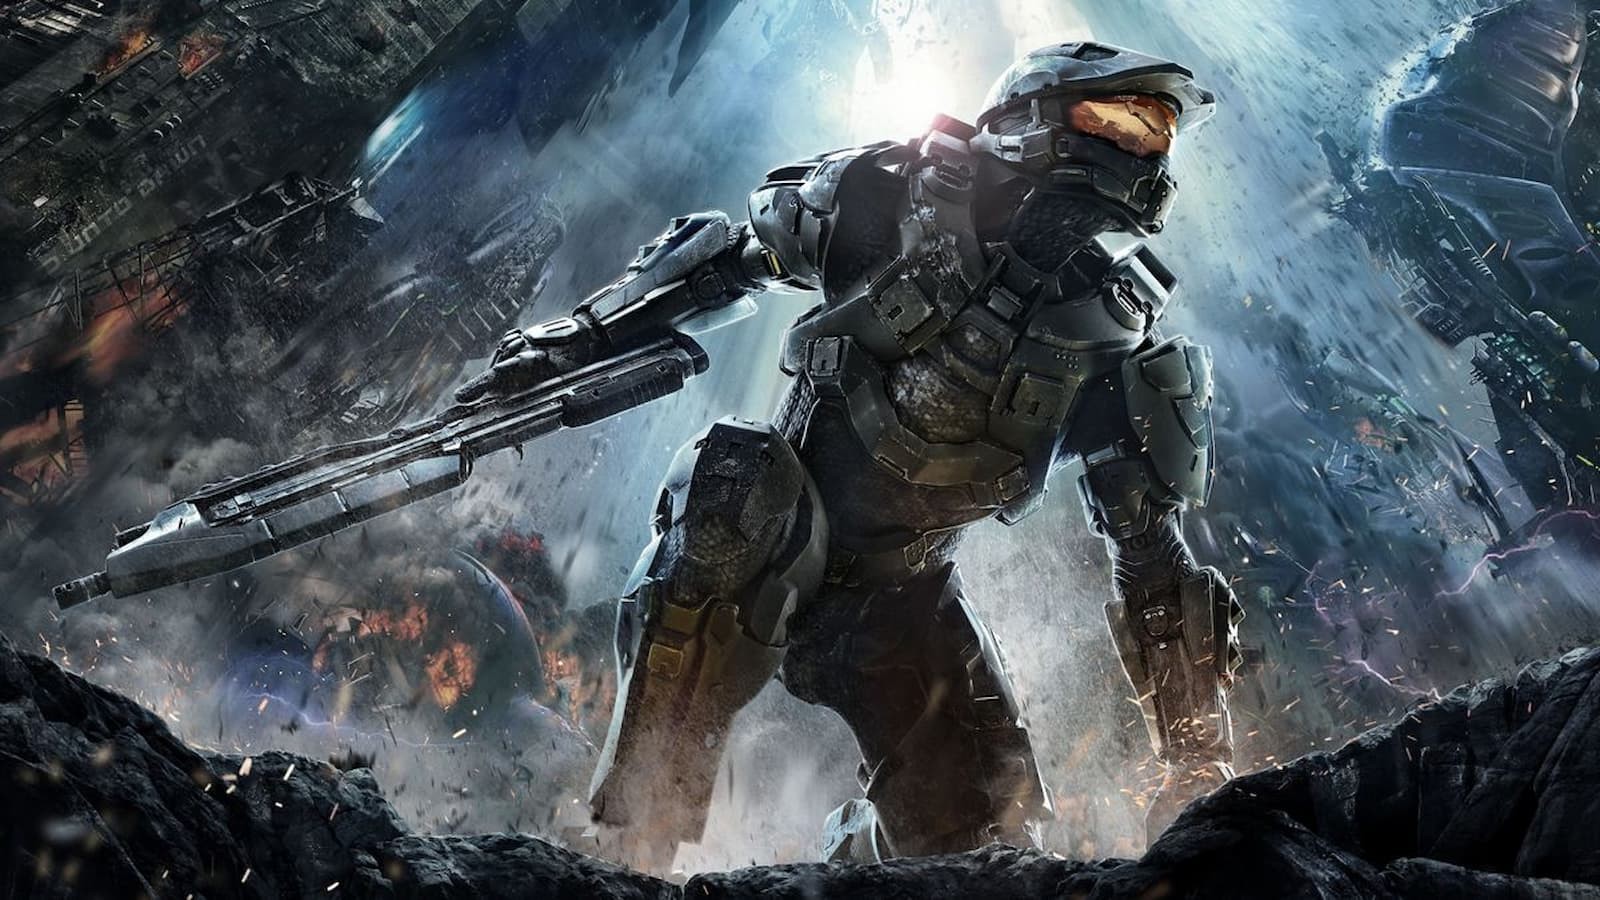 Daniel Craig's favorite gaming series is Halo. Image credit: Xbox